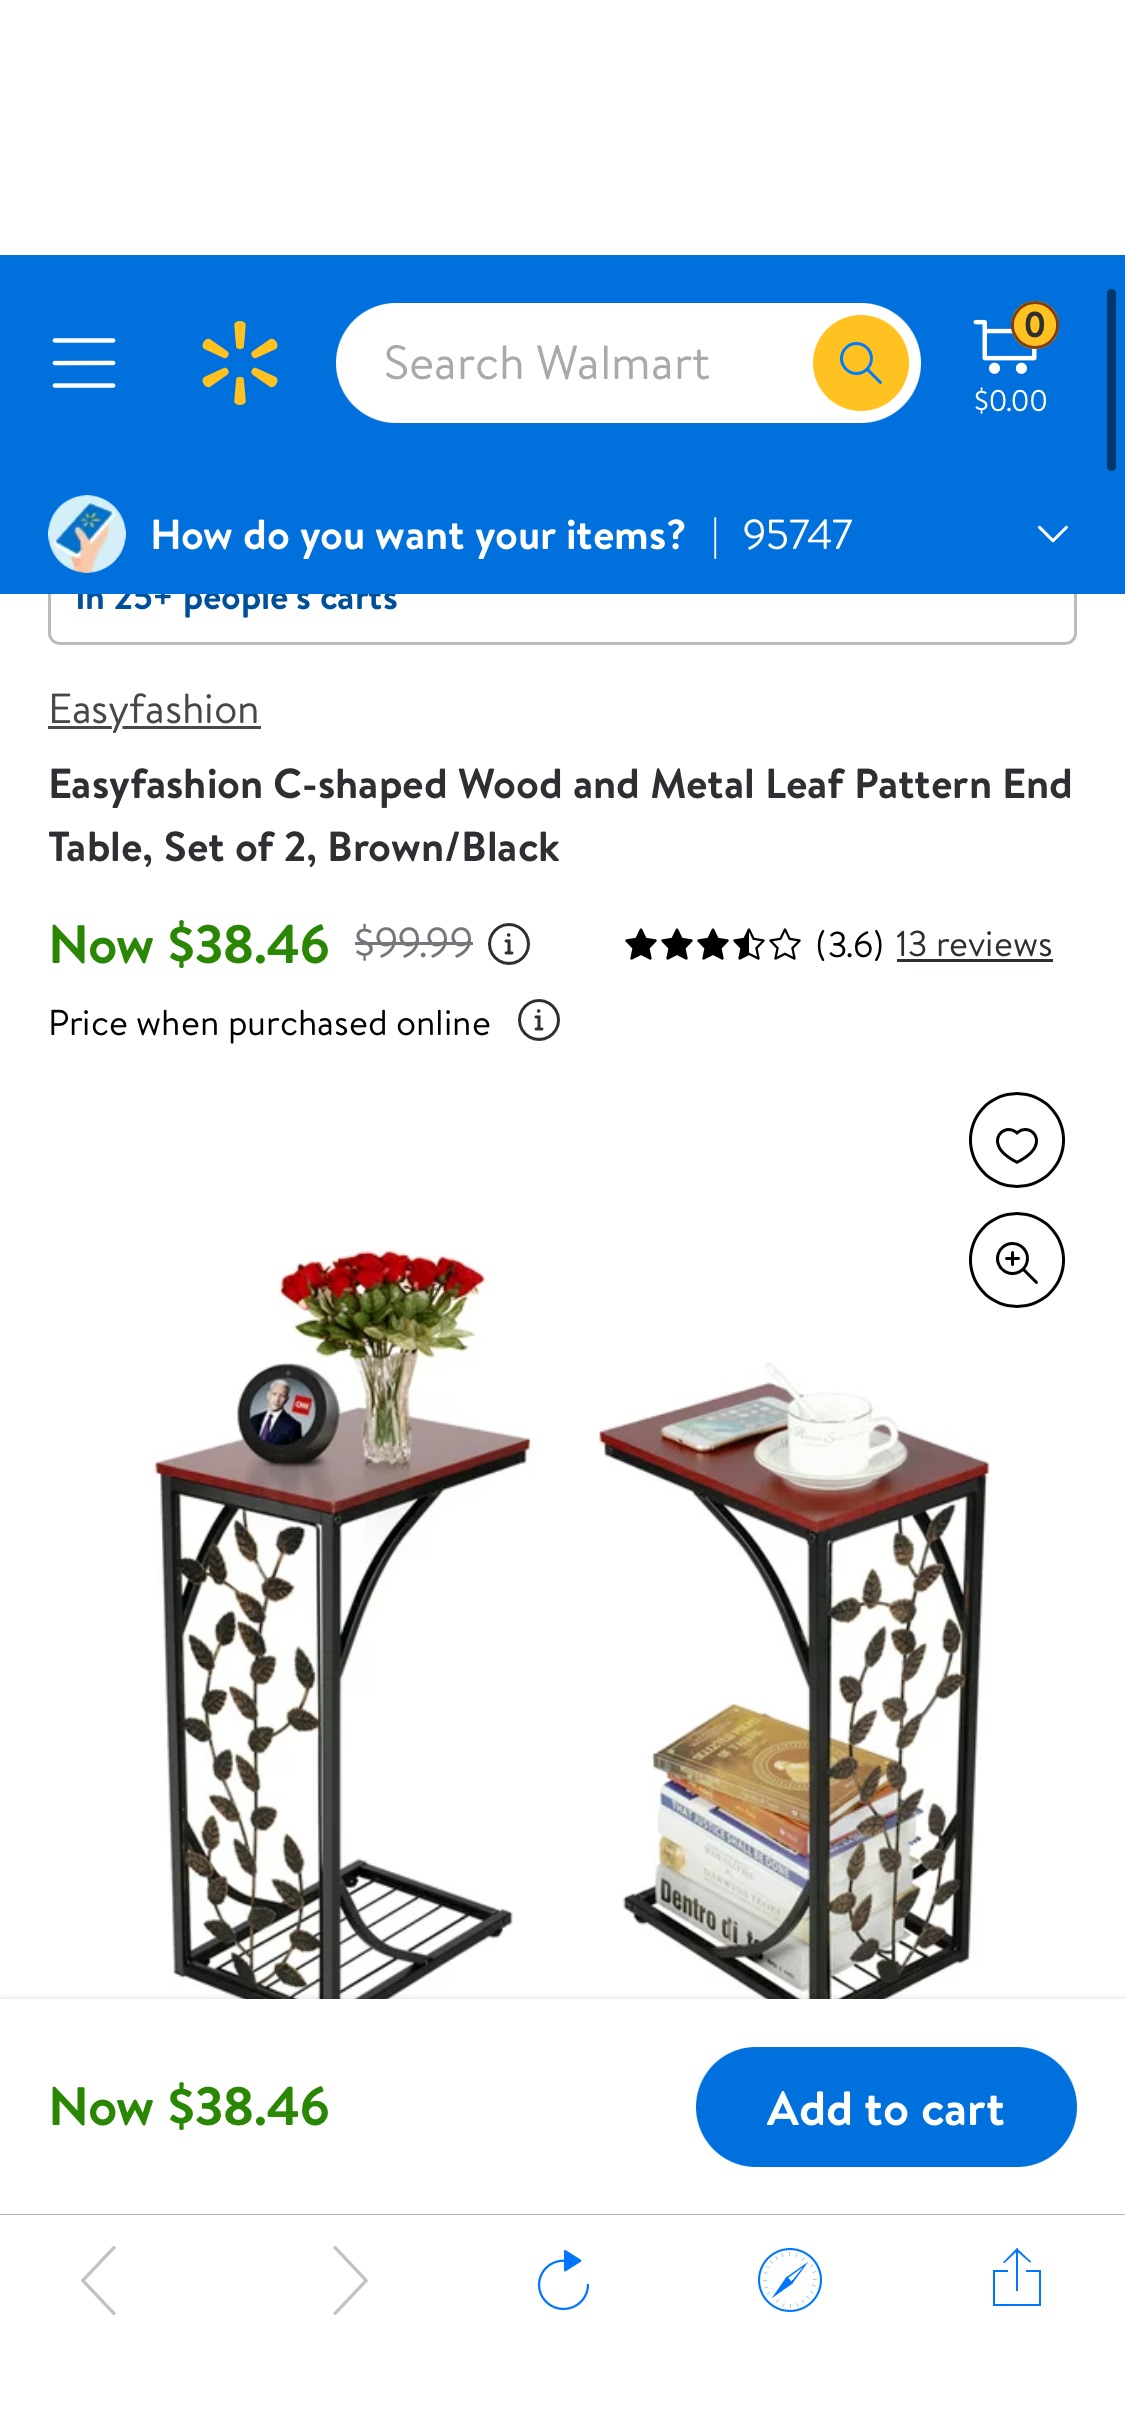 Easyfashion C-shaped Wood and Metal Leaf Pattern End Table, Set of 2, Brown/Black - Walmart.com